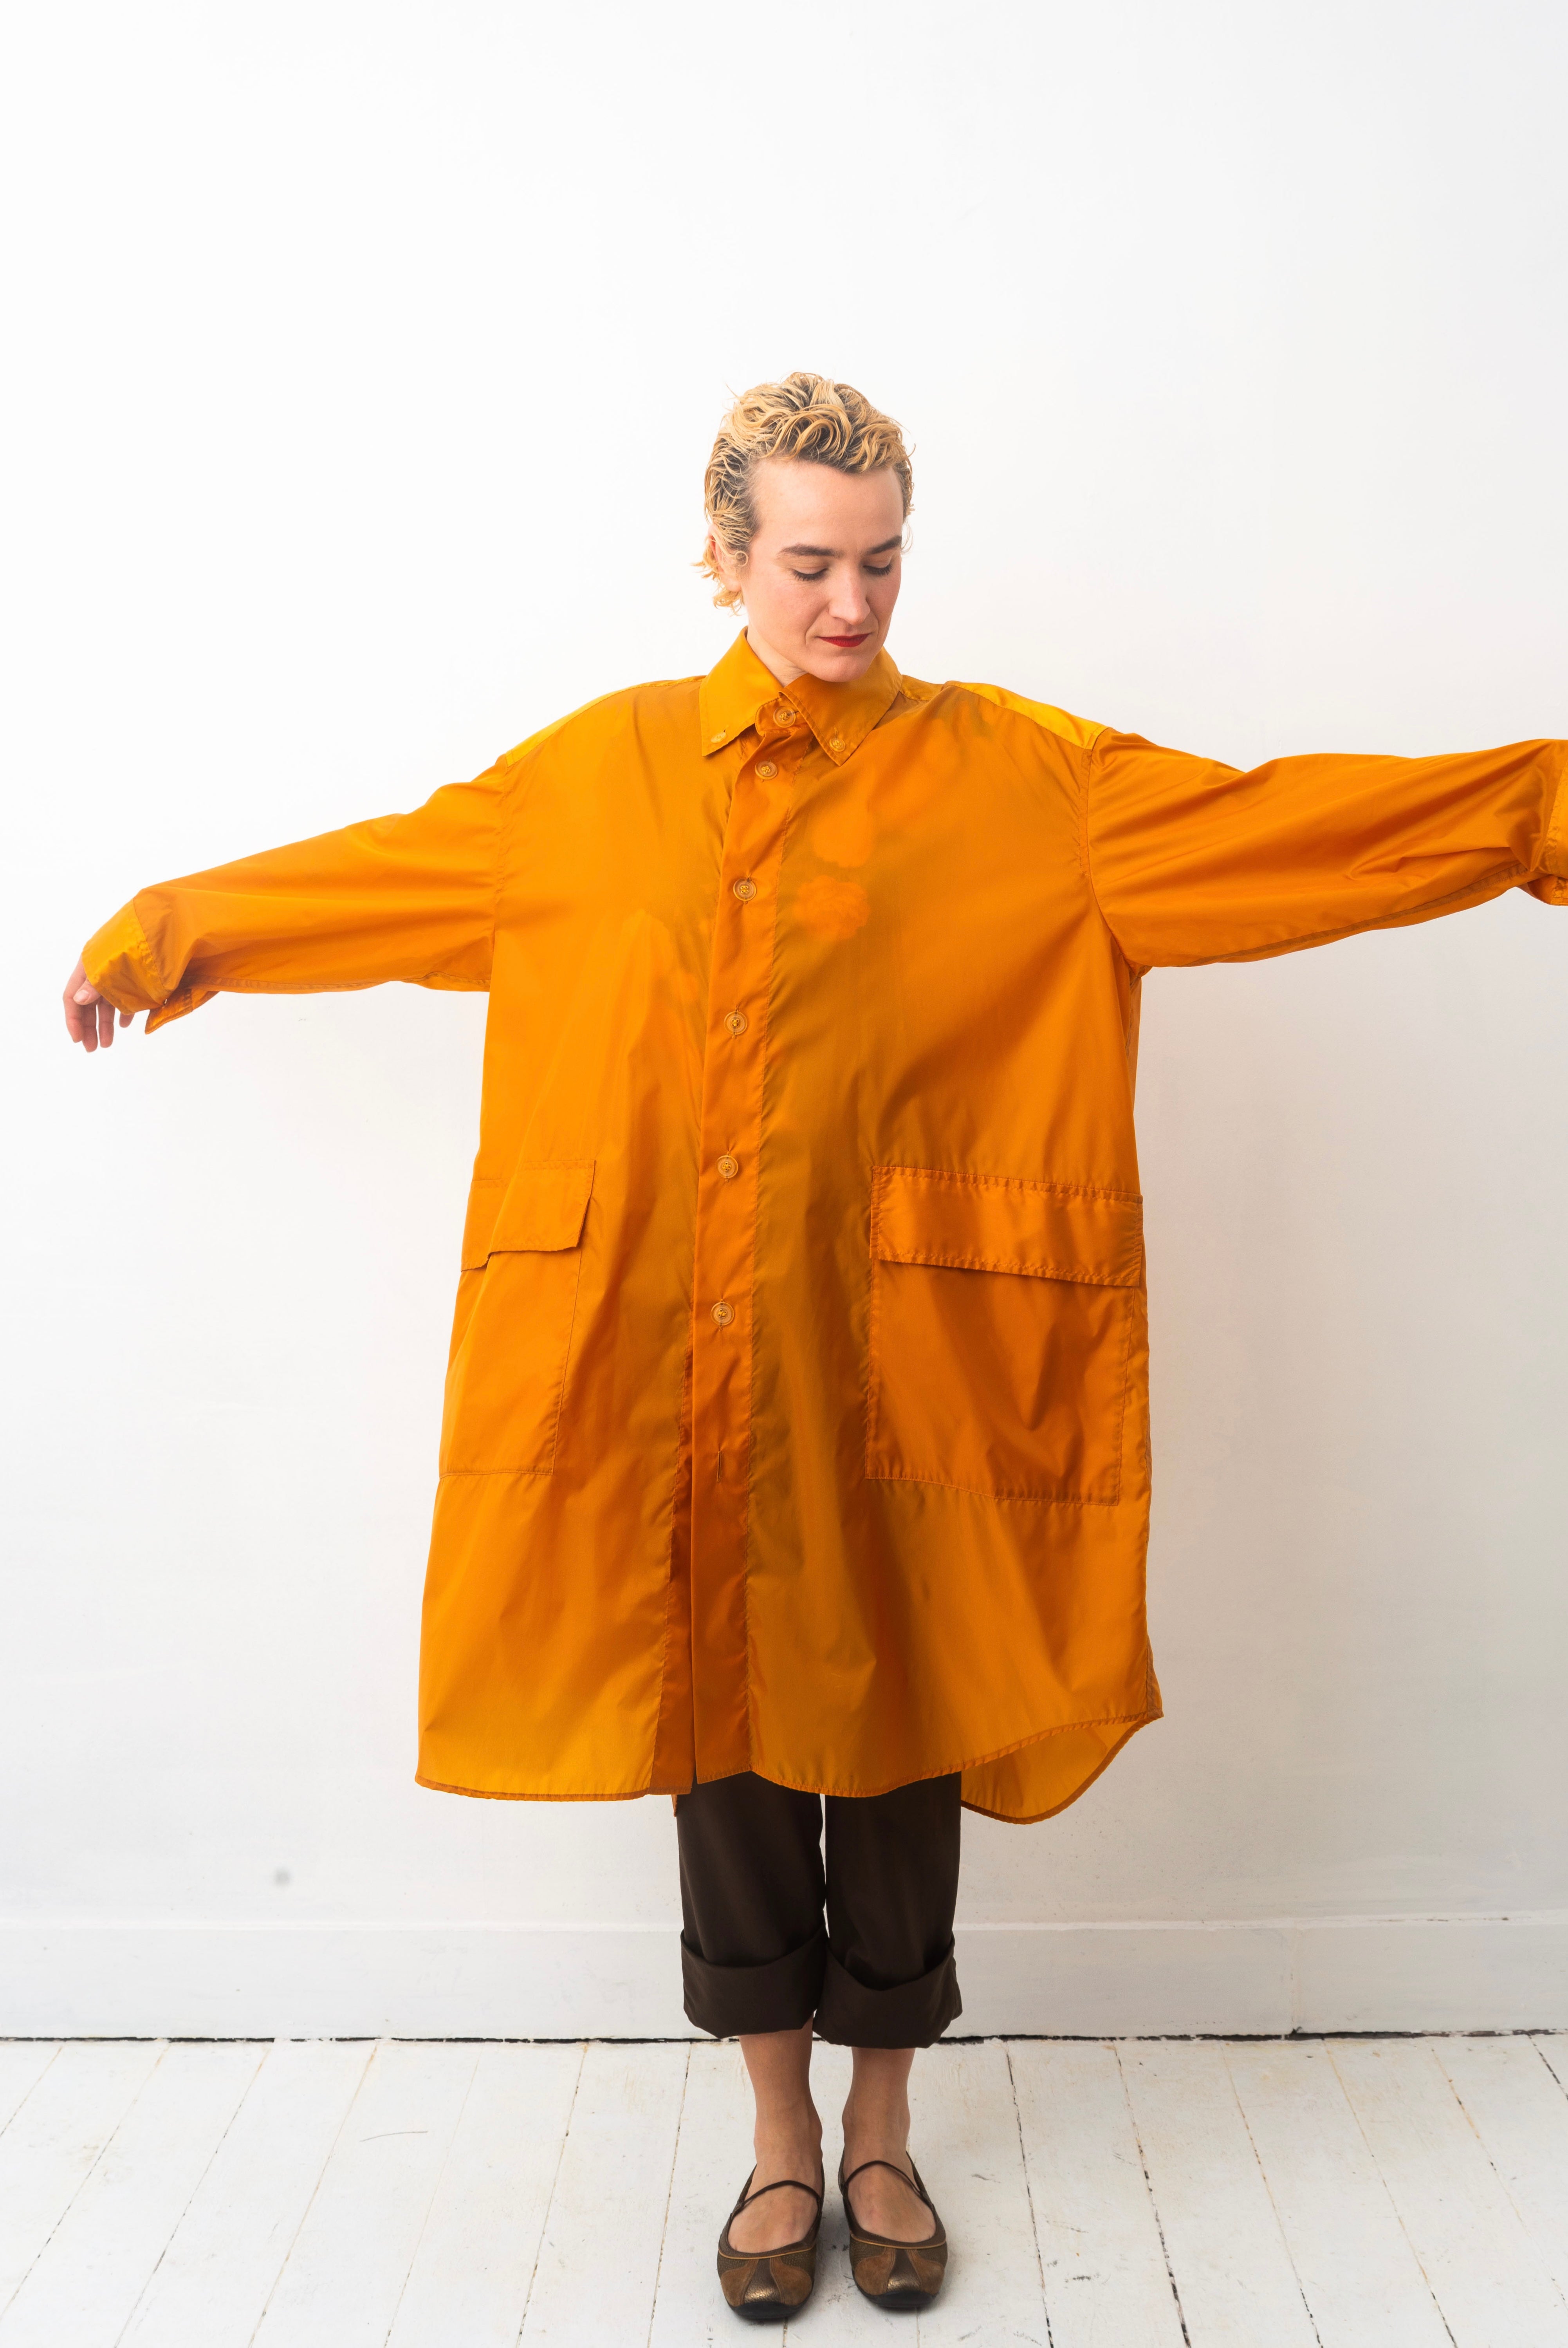 Issey Miyake Windcoat in orange nylon from the 90's – Heterodoxa_